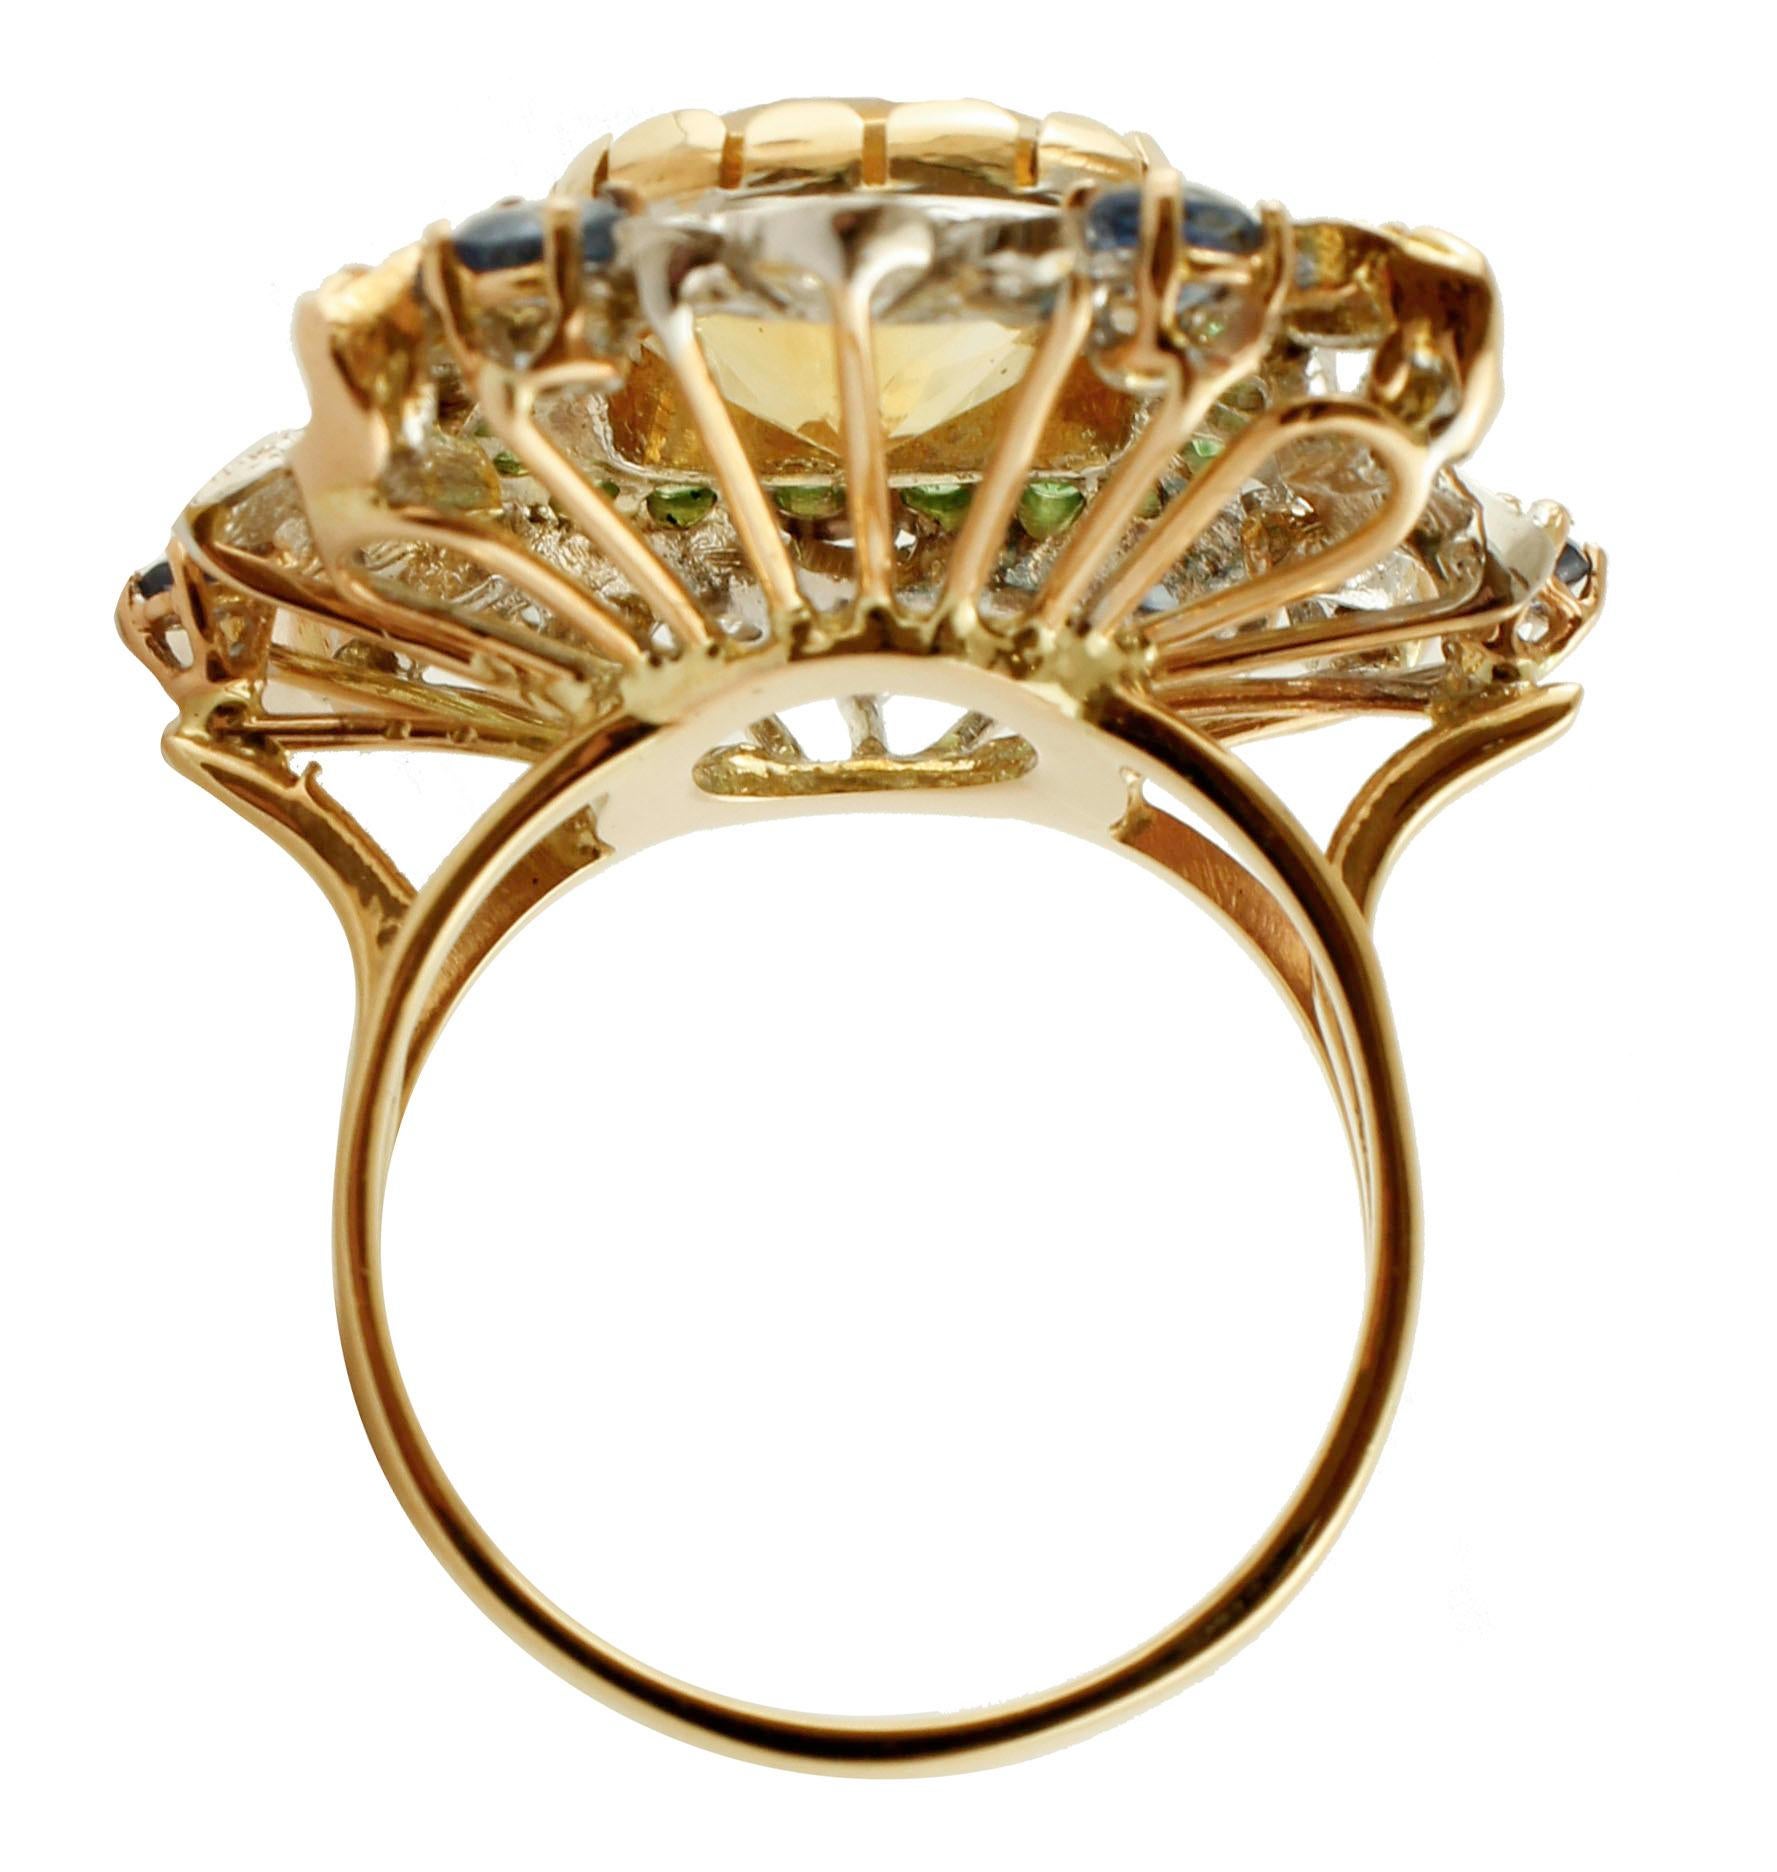 Brilliant Cut Diamonds, Blue Sapphires, Tsavorites Topaz 14K Rose and White Gold Cocktail Ring For Sale